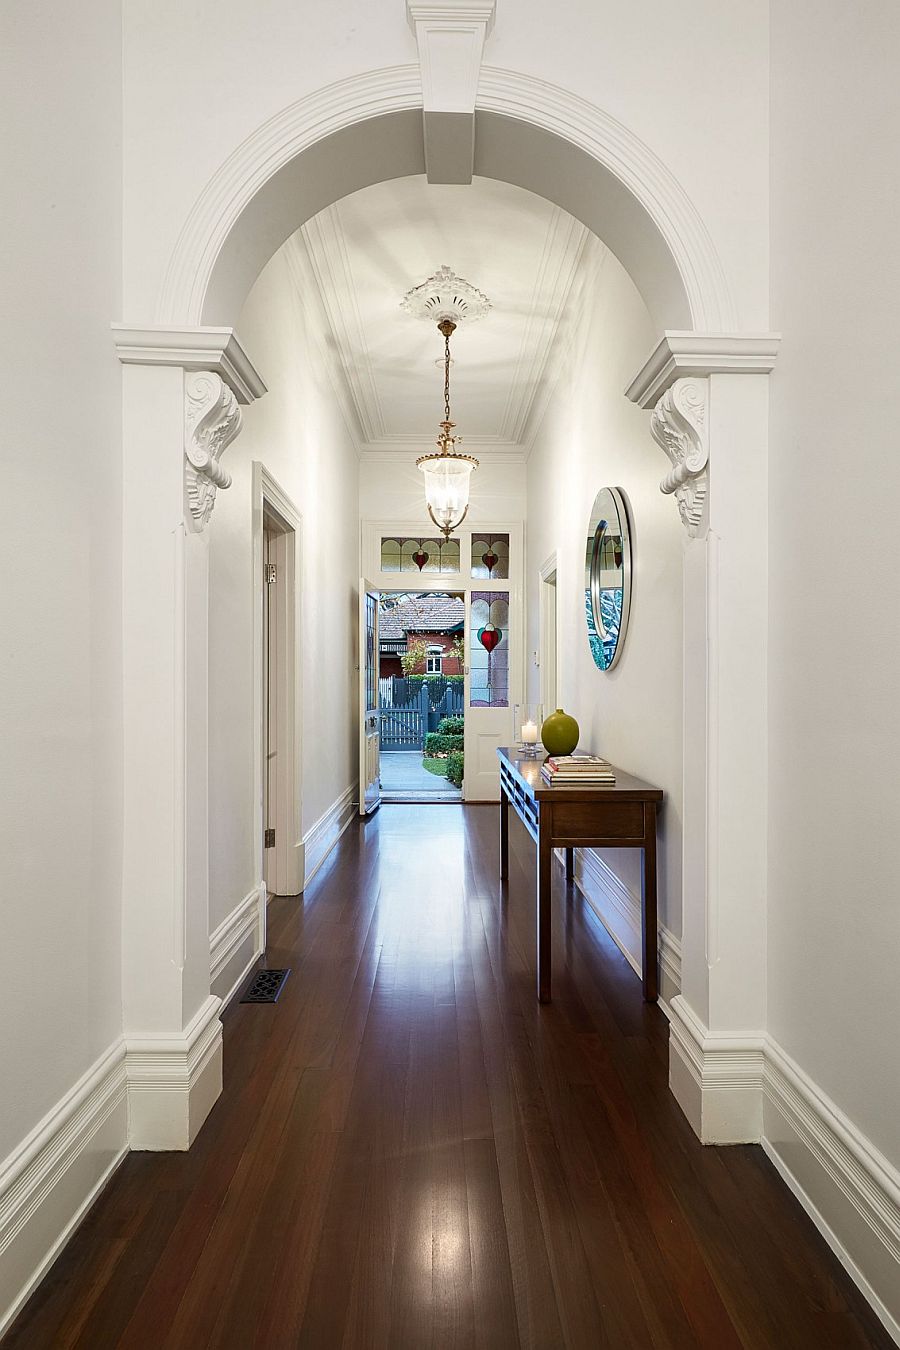 federation melbourne brick modern renovation interior transforms classic entry decoist hallway classy trim family